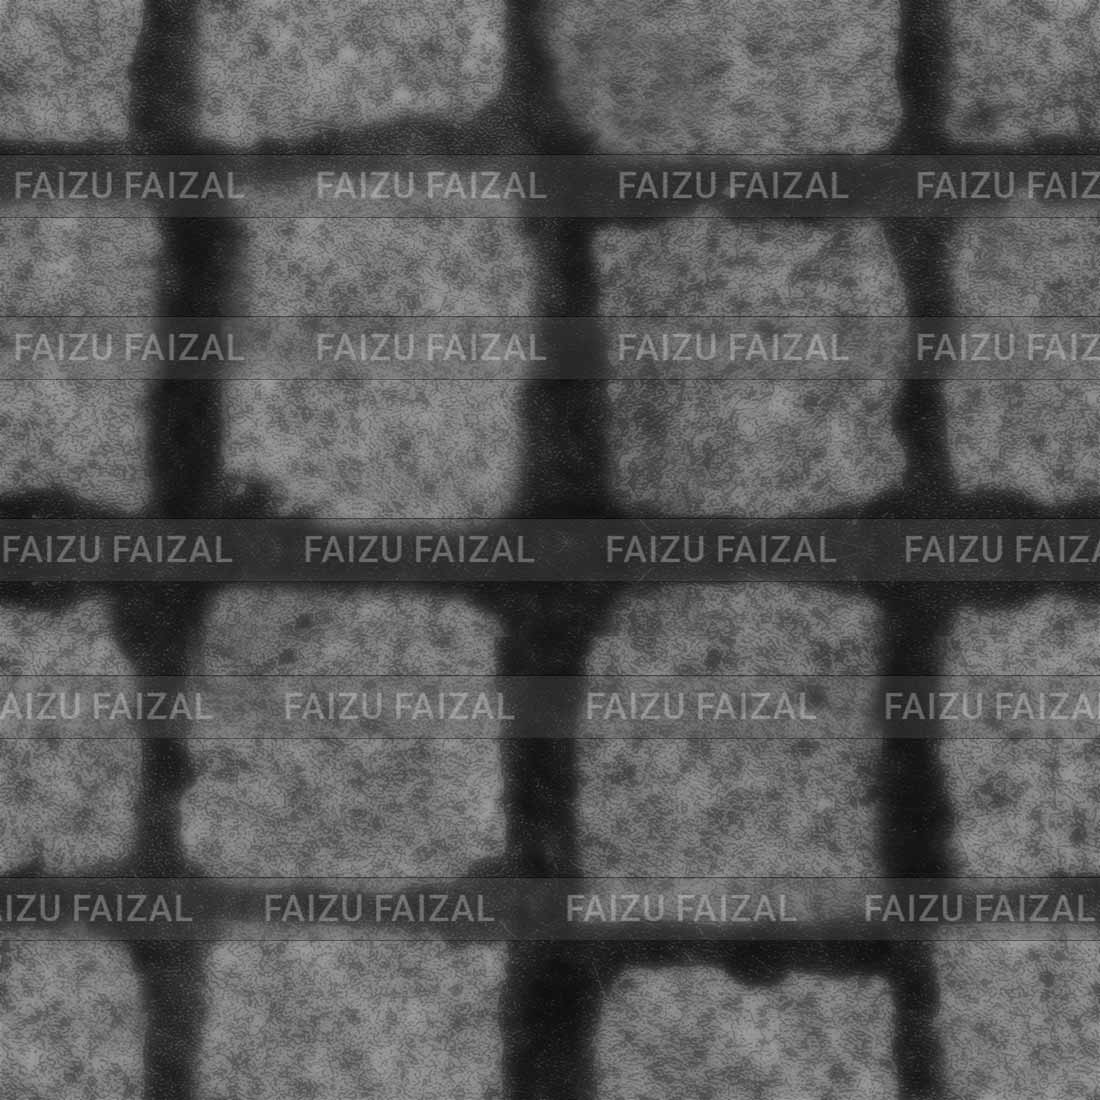 Black and white photo of the word fauzfafafafafafa.